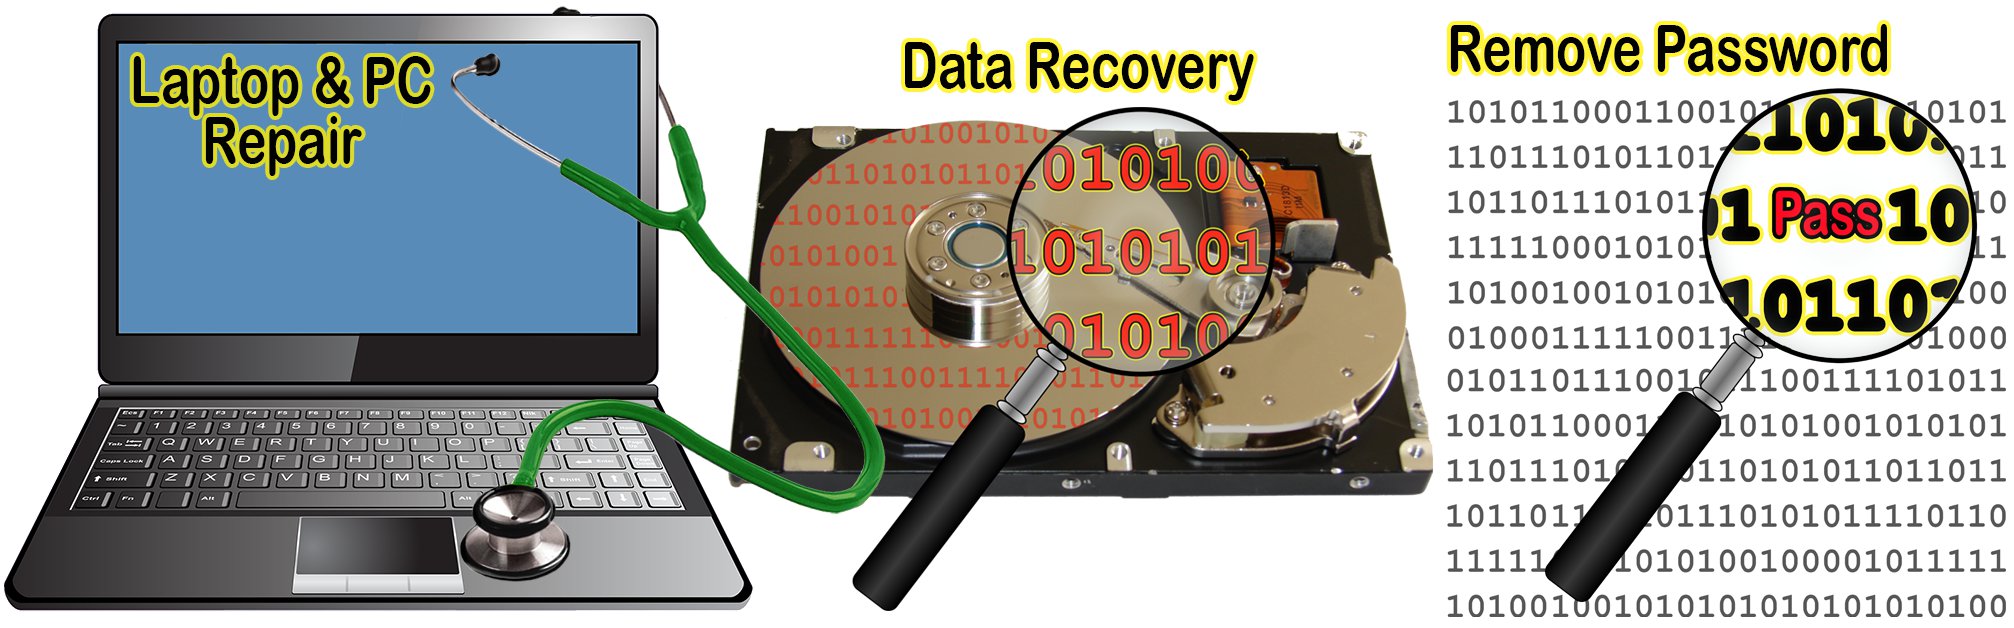 Trilogic Laptop Repair Data Recovery Password Removal